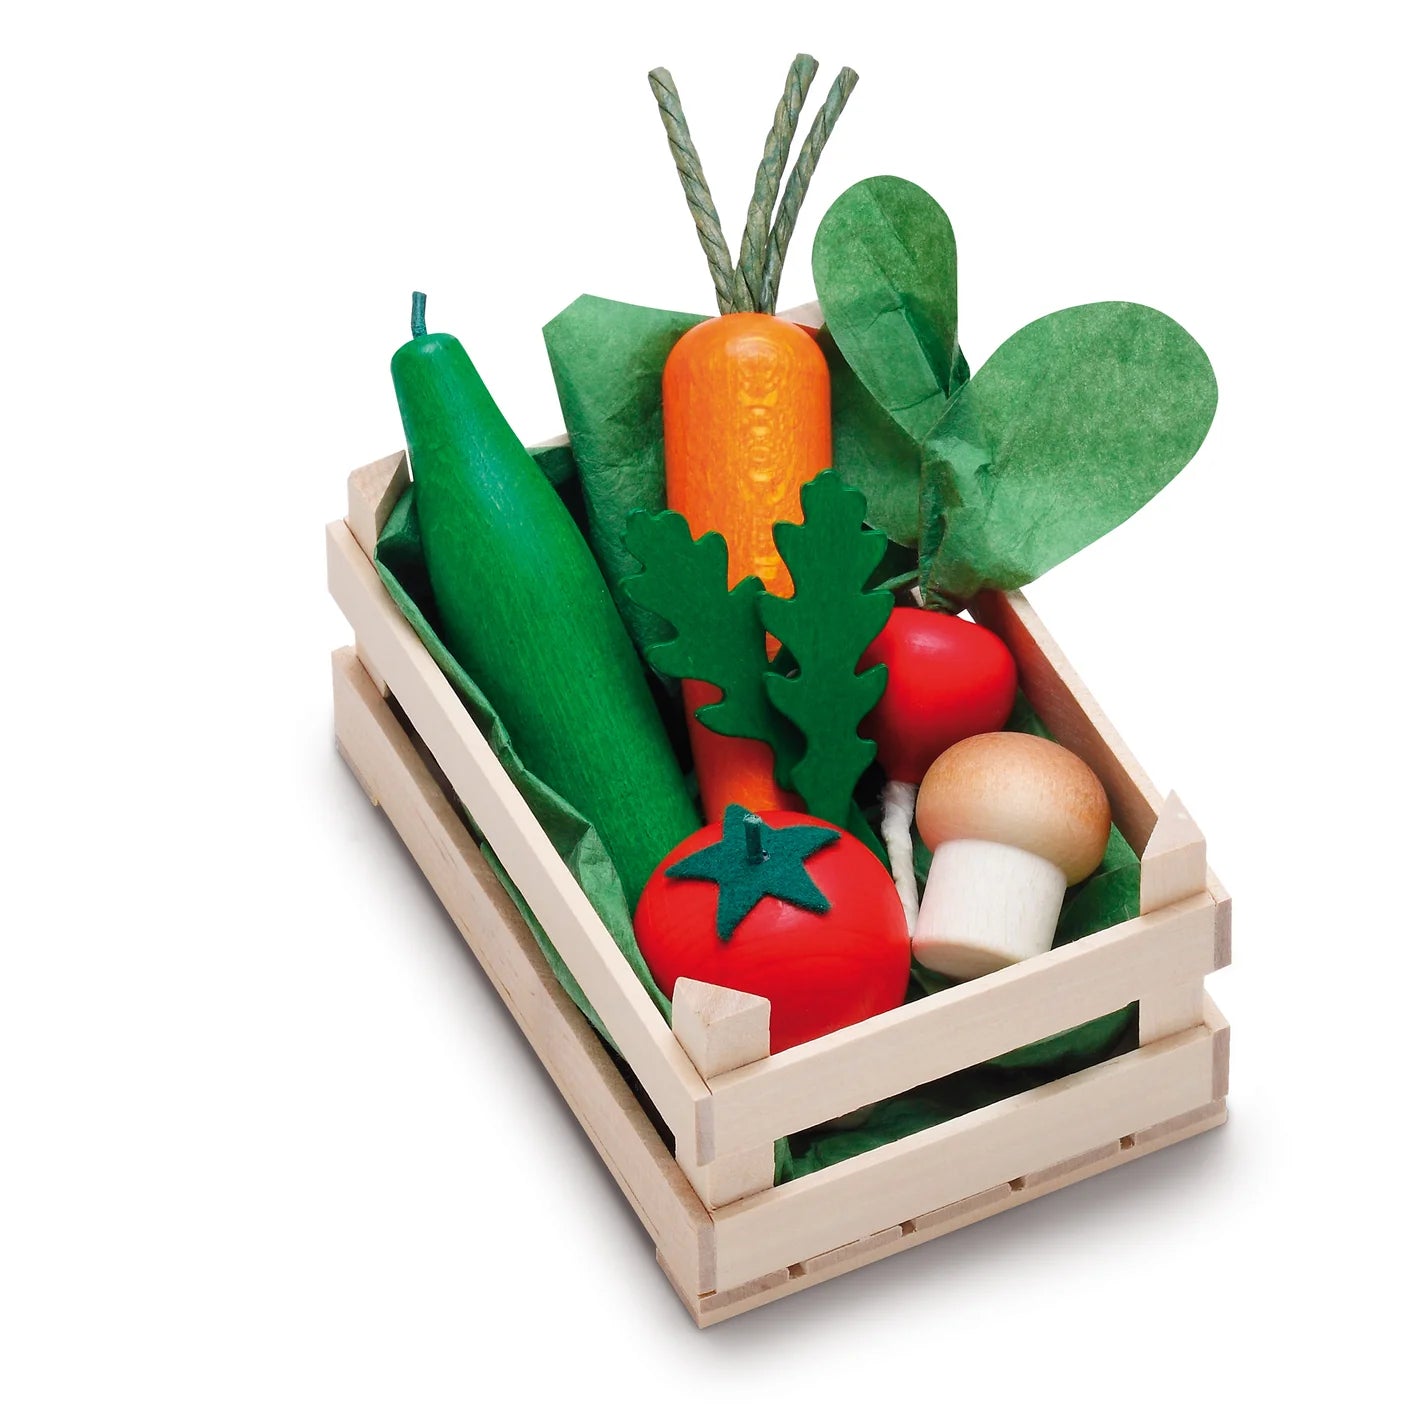 Wooden Vegetables Crate